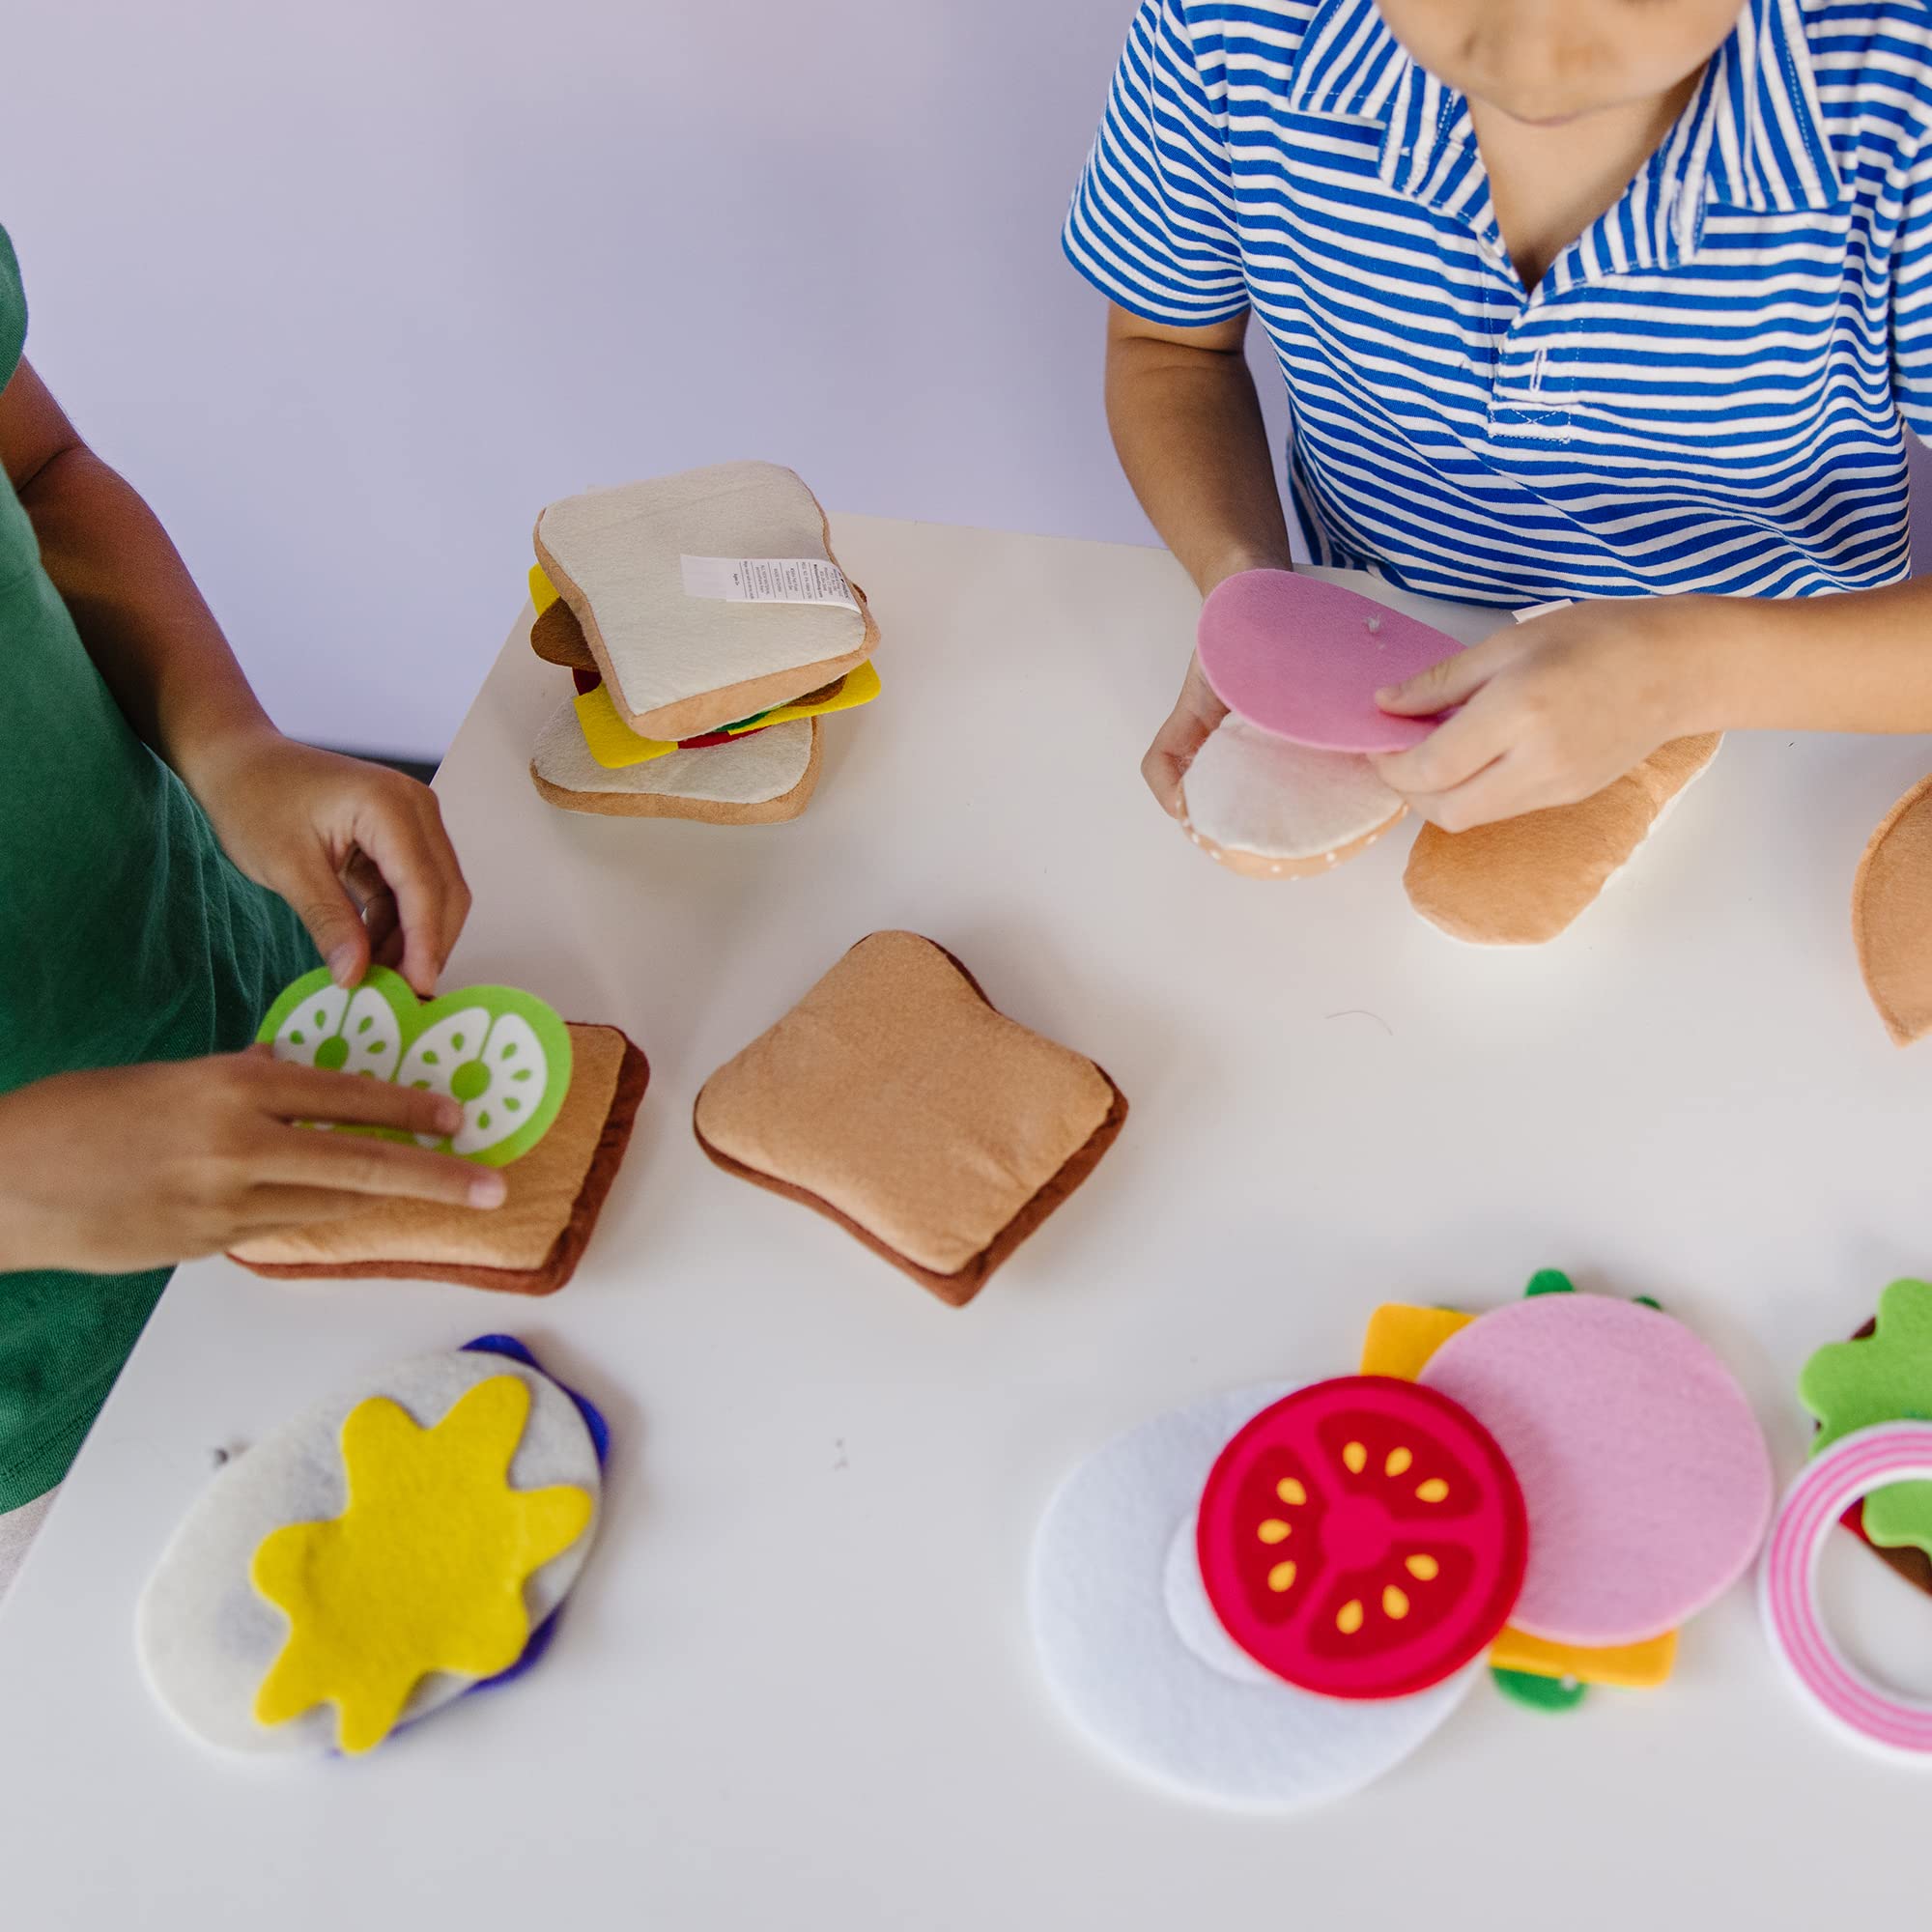 Melissa & Doug Felt Food Sandwich Play Food Set (33 pcs) - Felt Sandwich Play Set For Kids Kitchen, Pretend Play Sandwich, Felt Sandwich Toy For Toddlers Kids Ages 2+,Orange